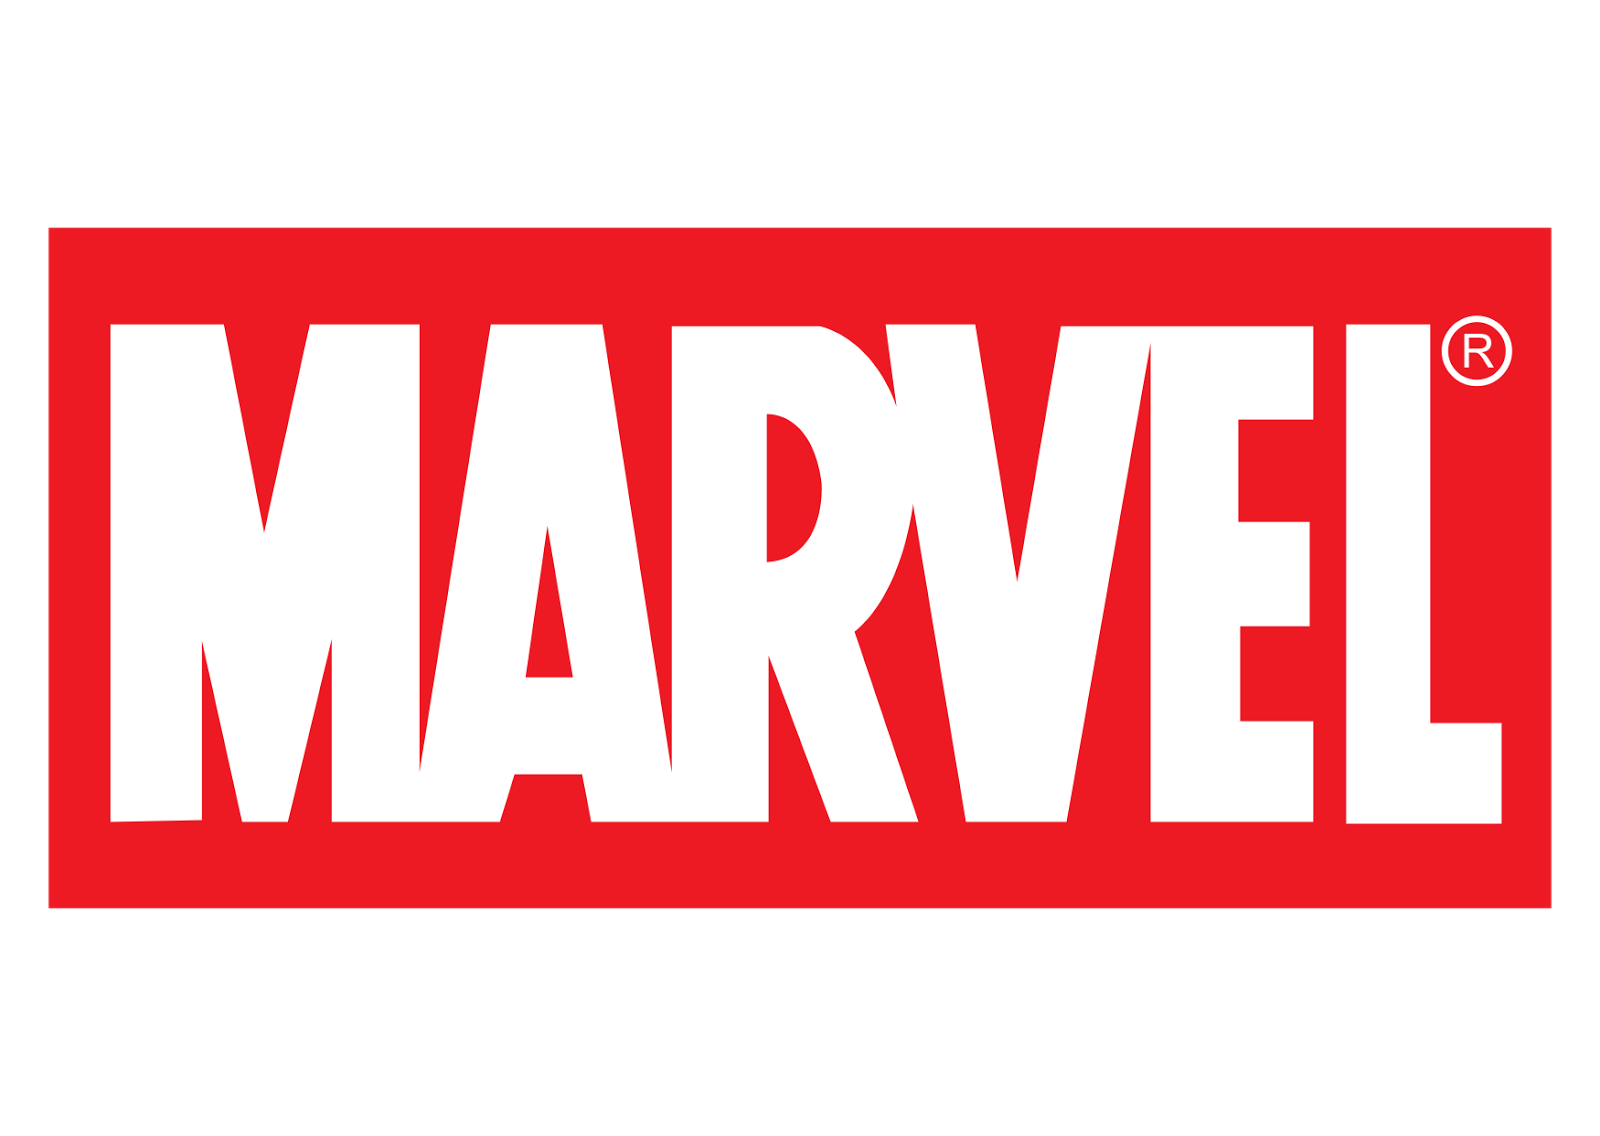 Marvel Studios Logo PNG